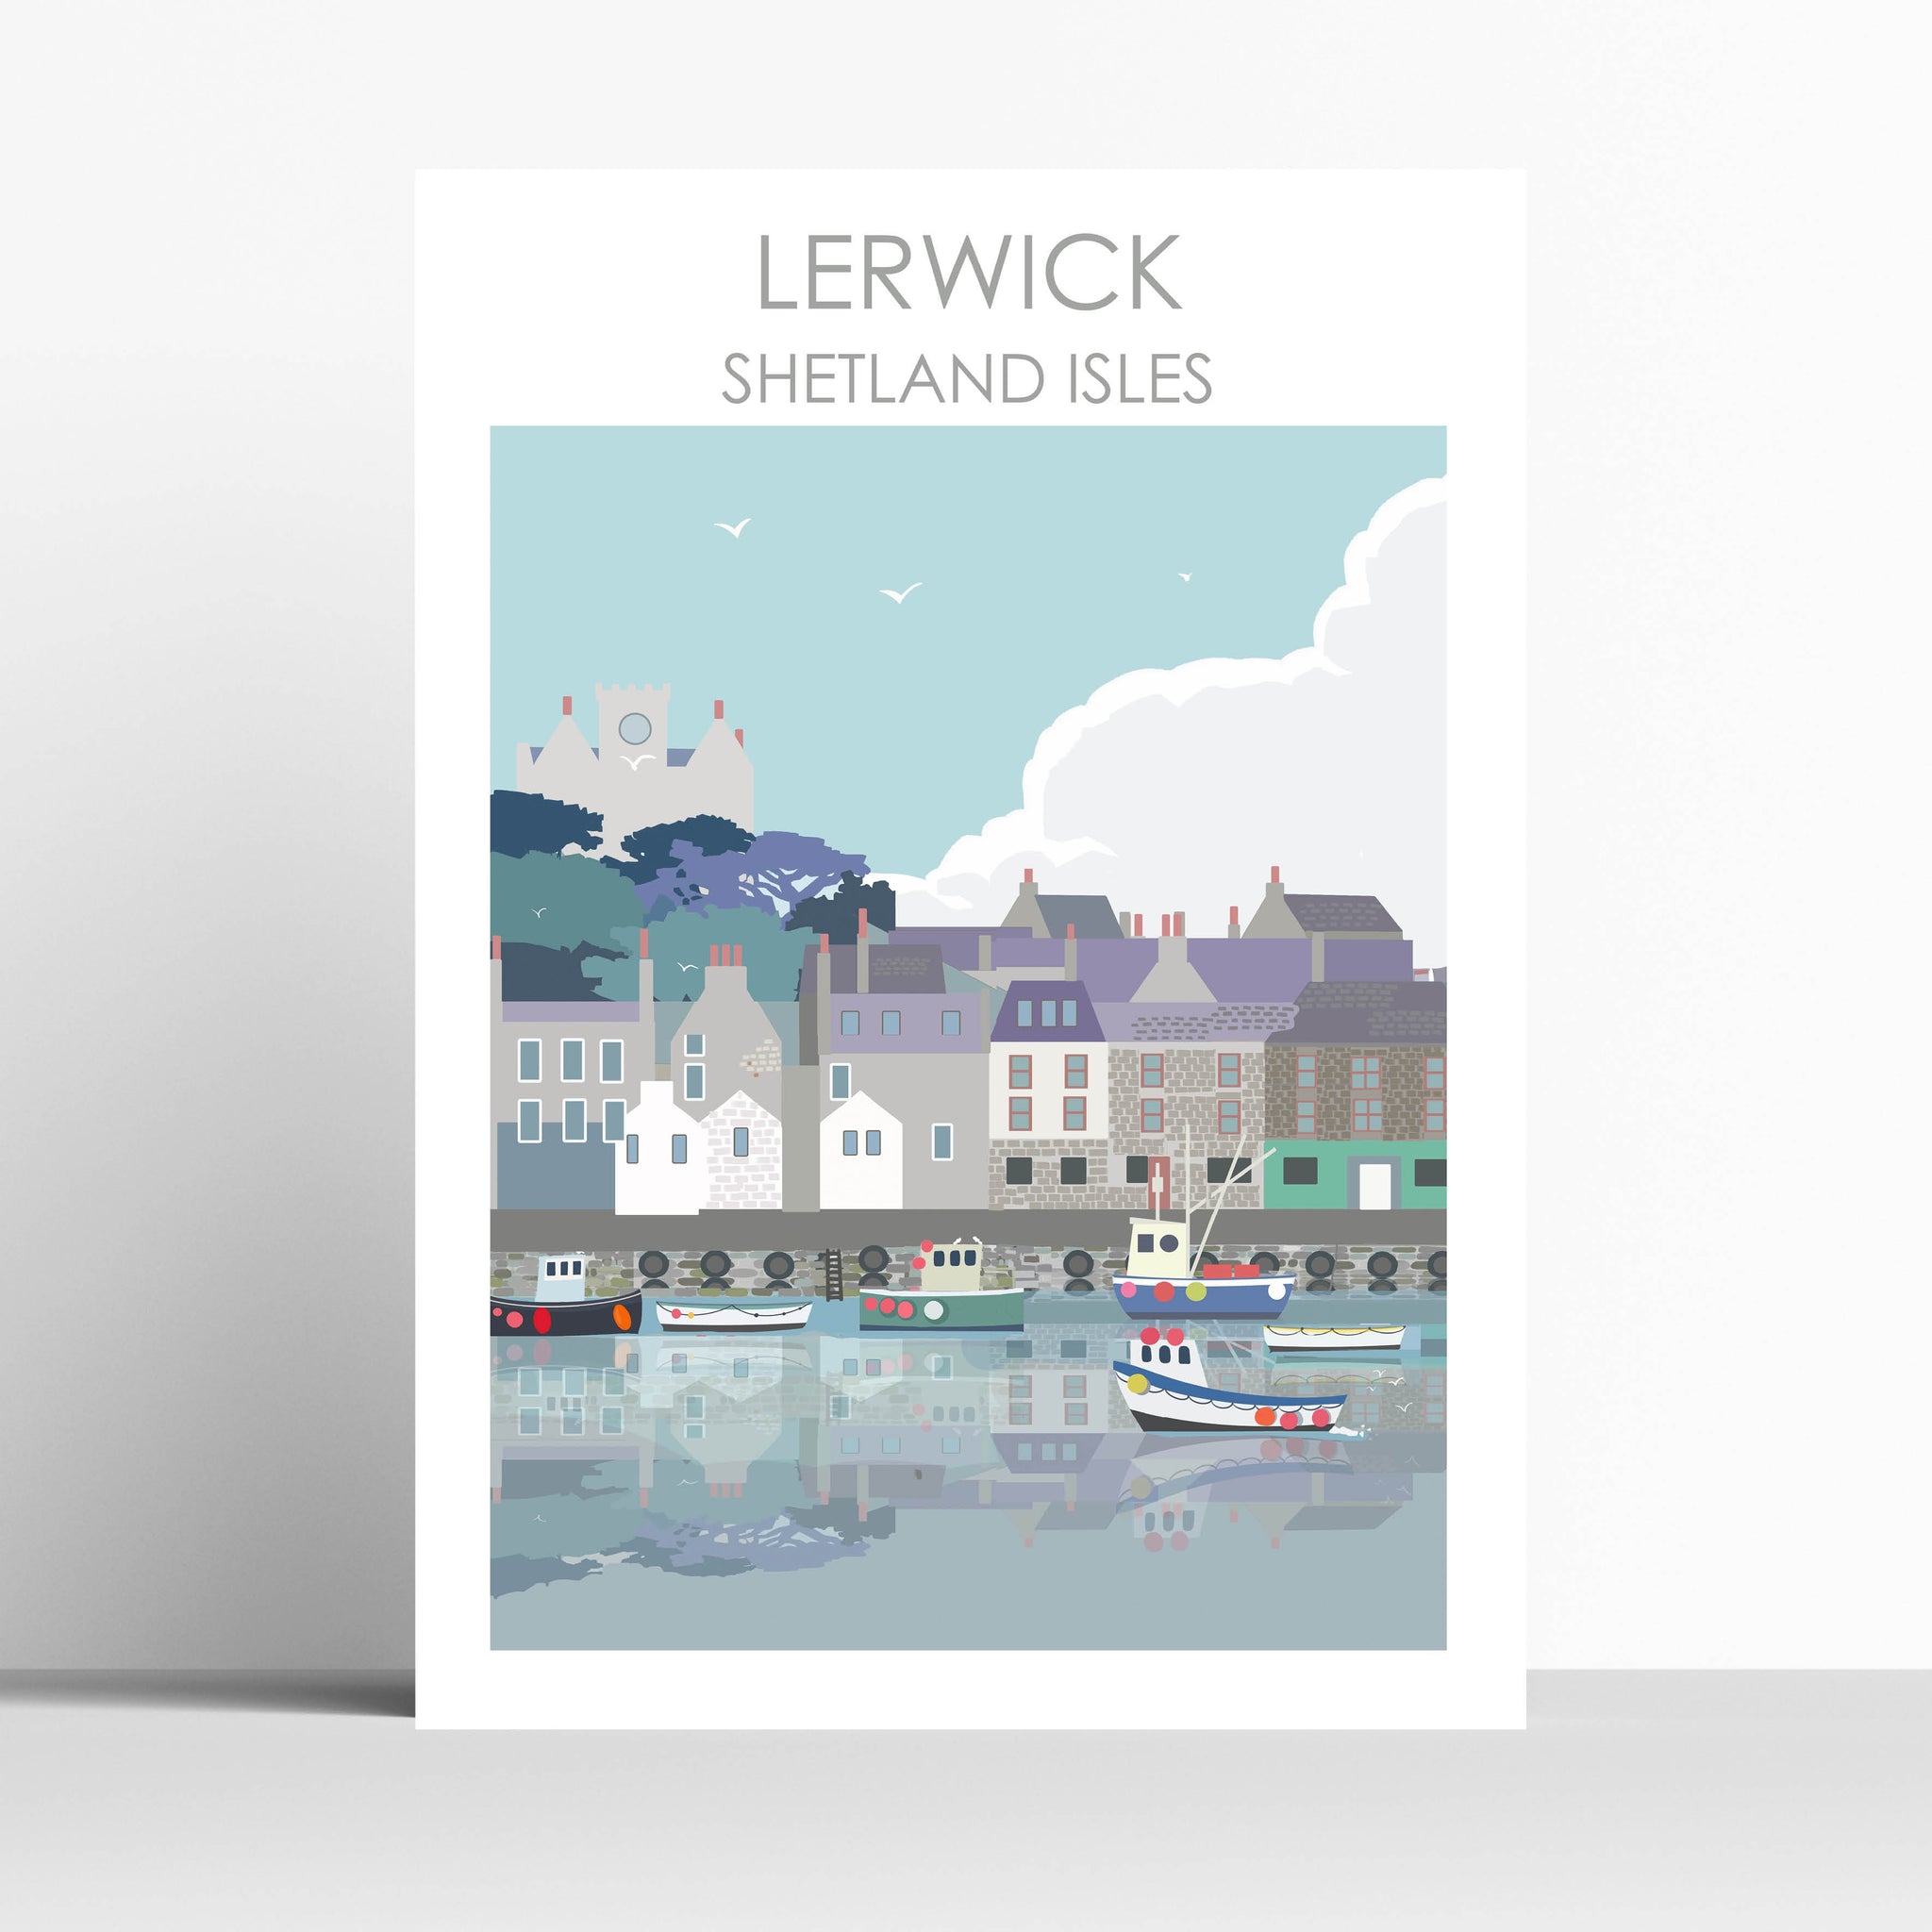 Lerwick Shetland Isles Scotland